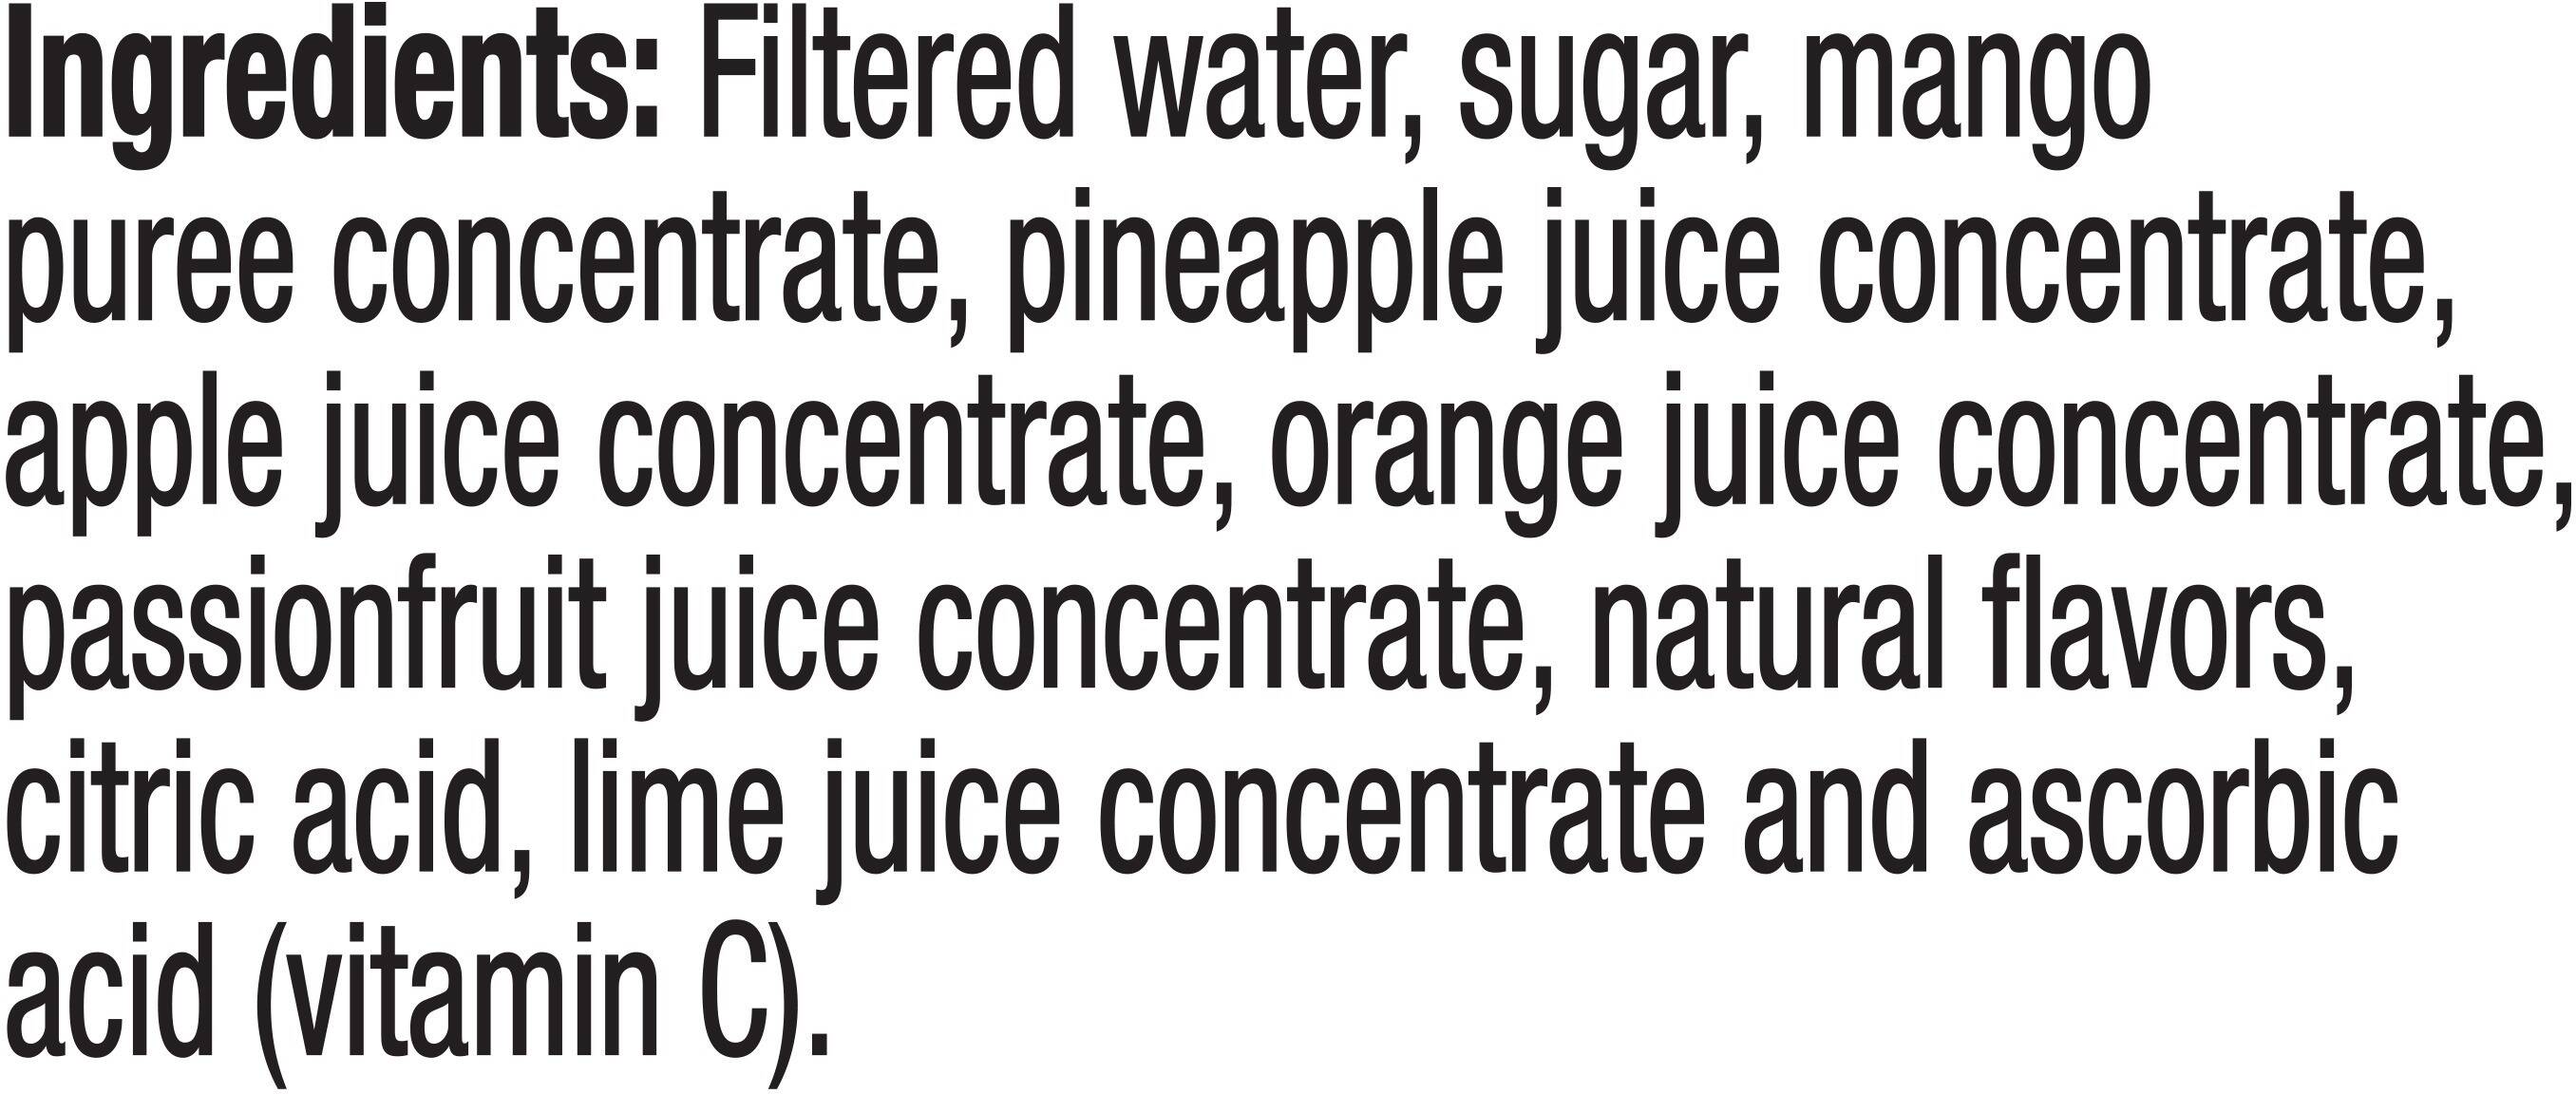 Image describing nutrition information for product Tropicana Pure Premium Mango Pineapple